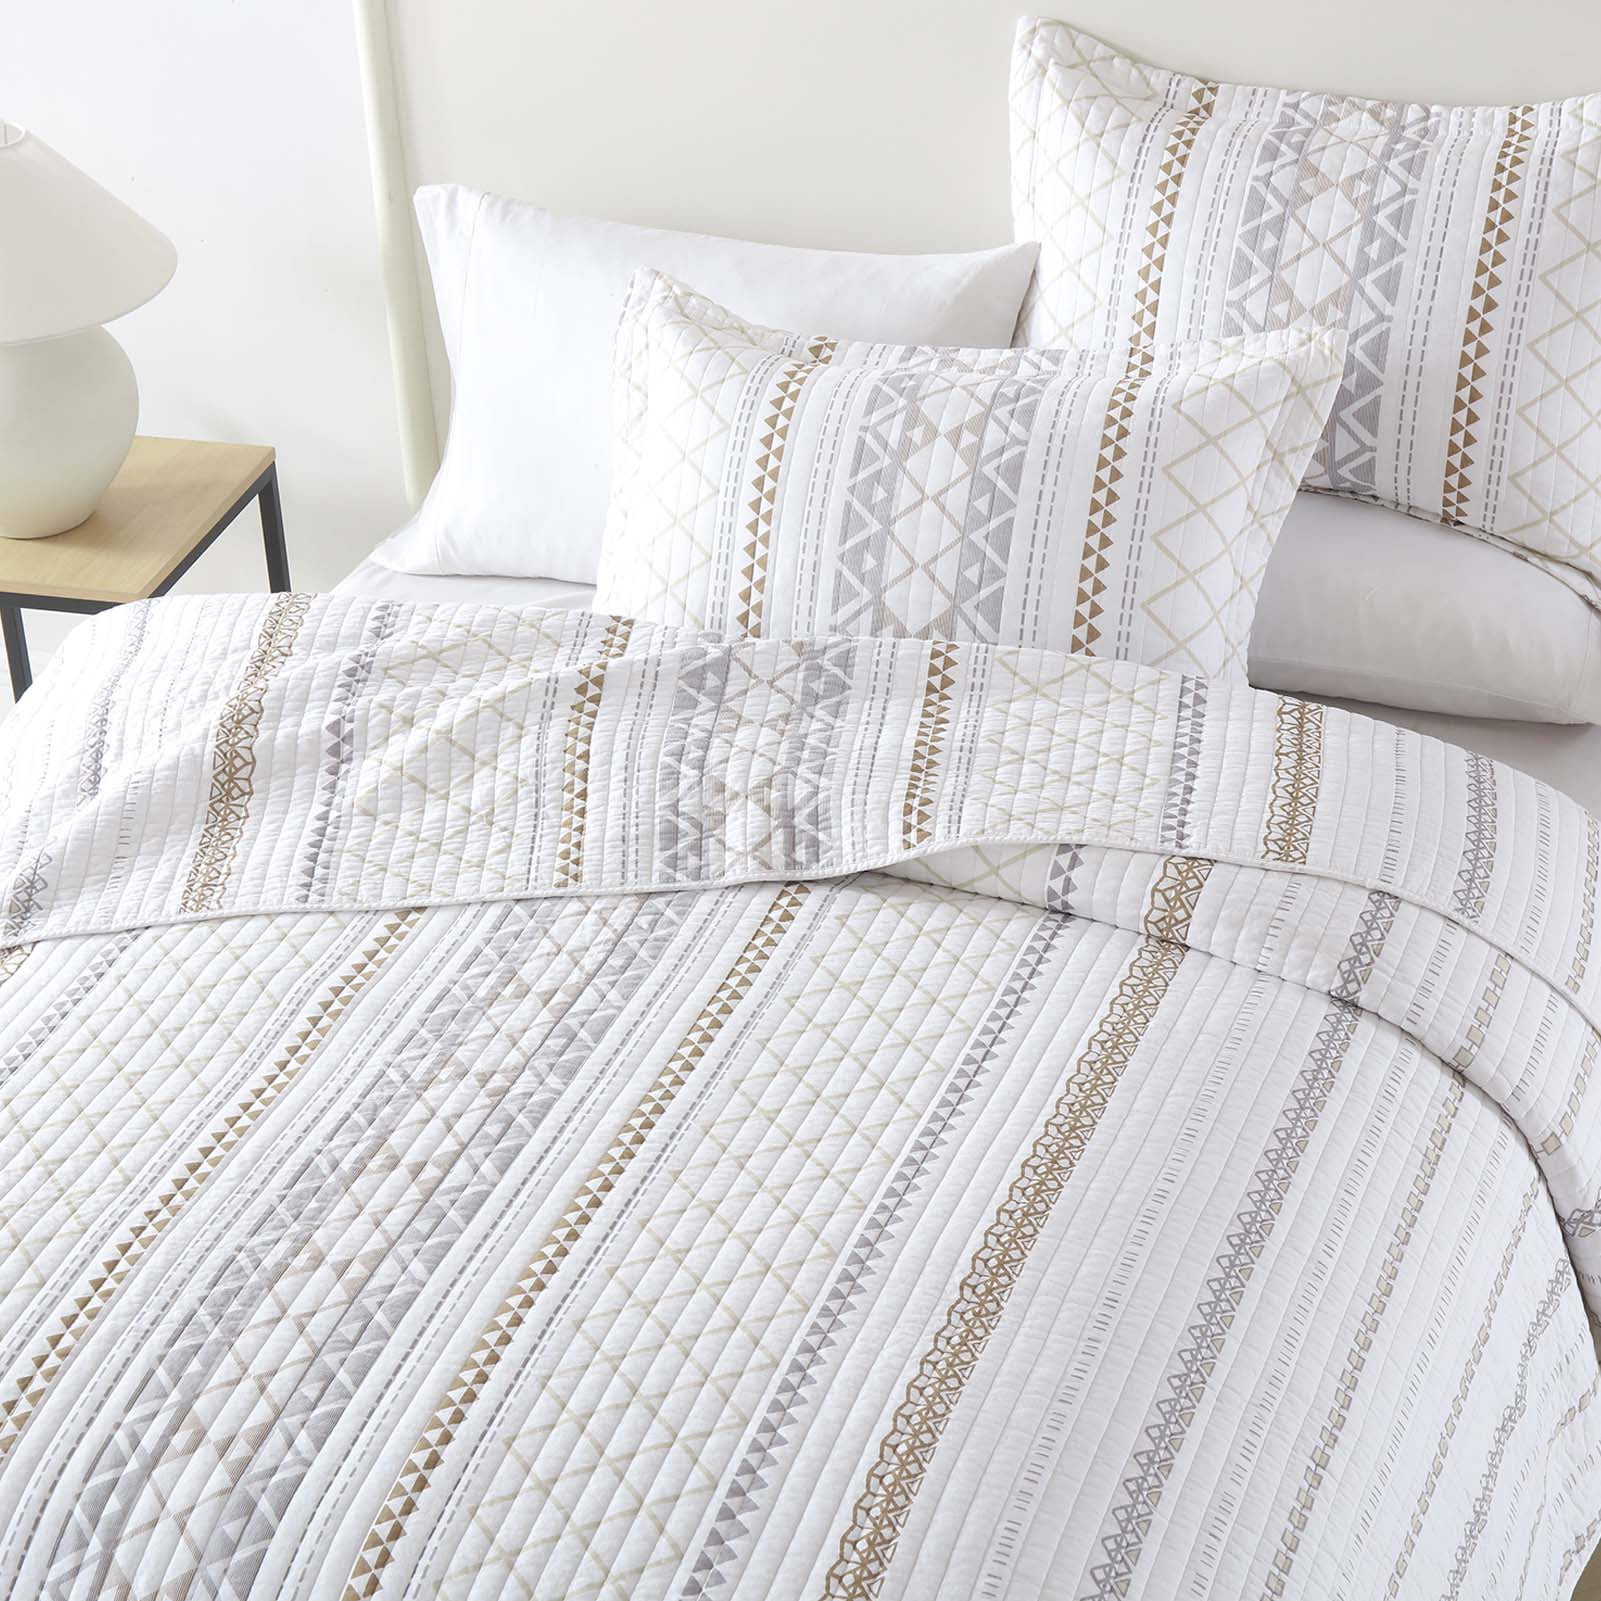 PANGUSHAN 100% Cotton Quilt Set Queen Size, 3pcs Striped Bedspread ...